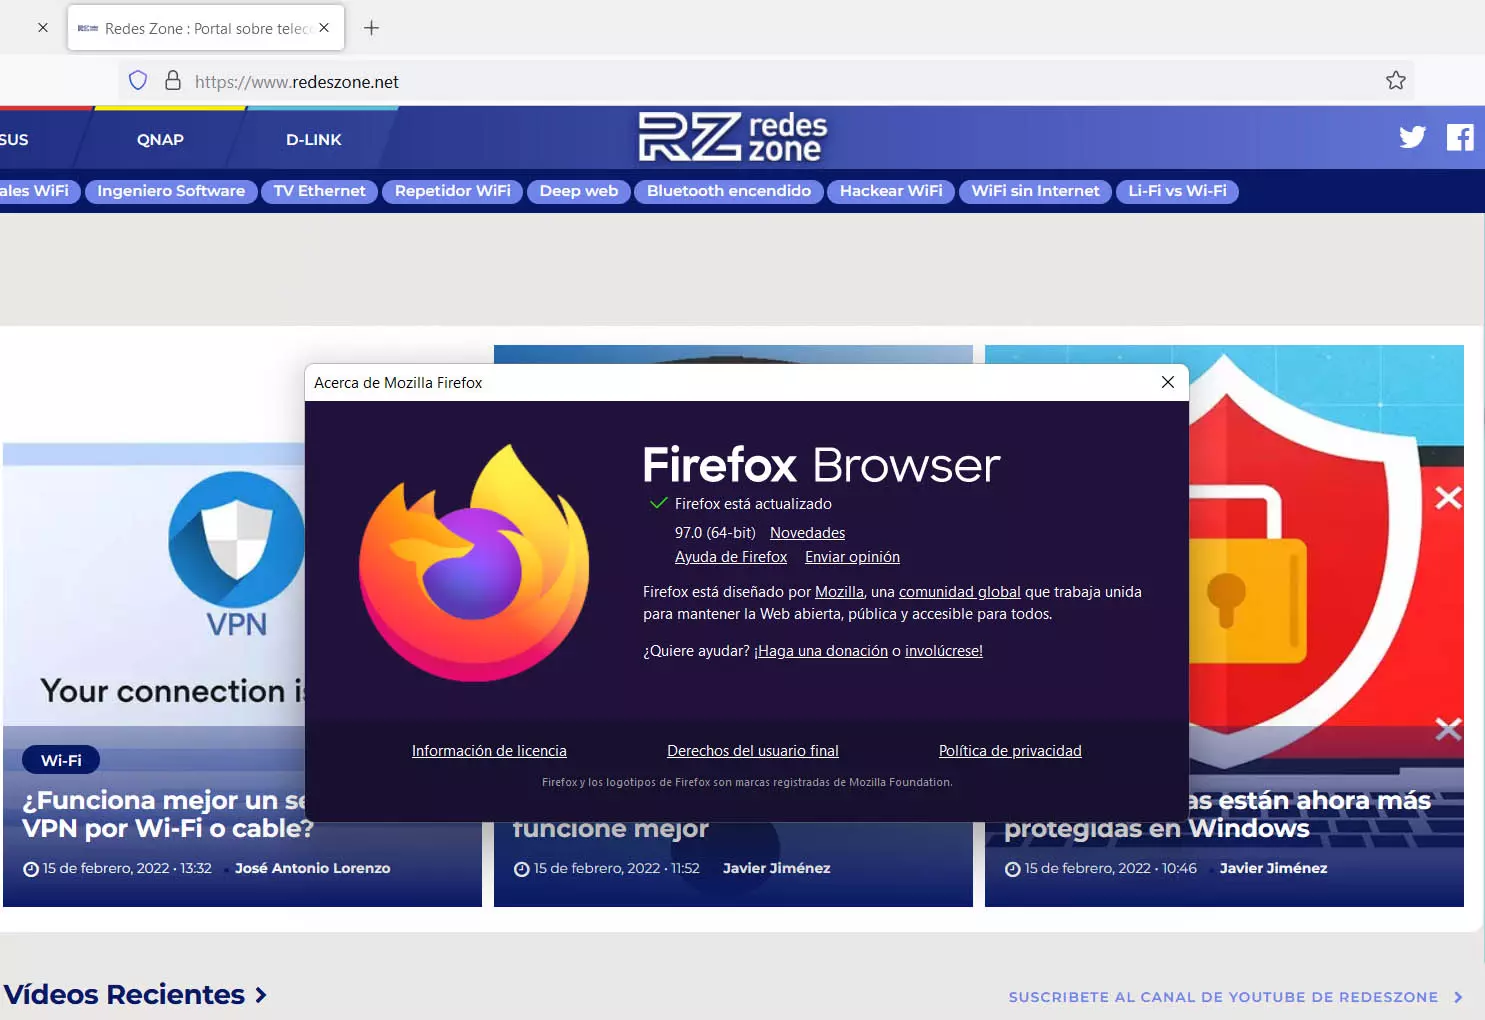 Update Firefox